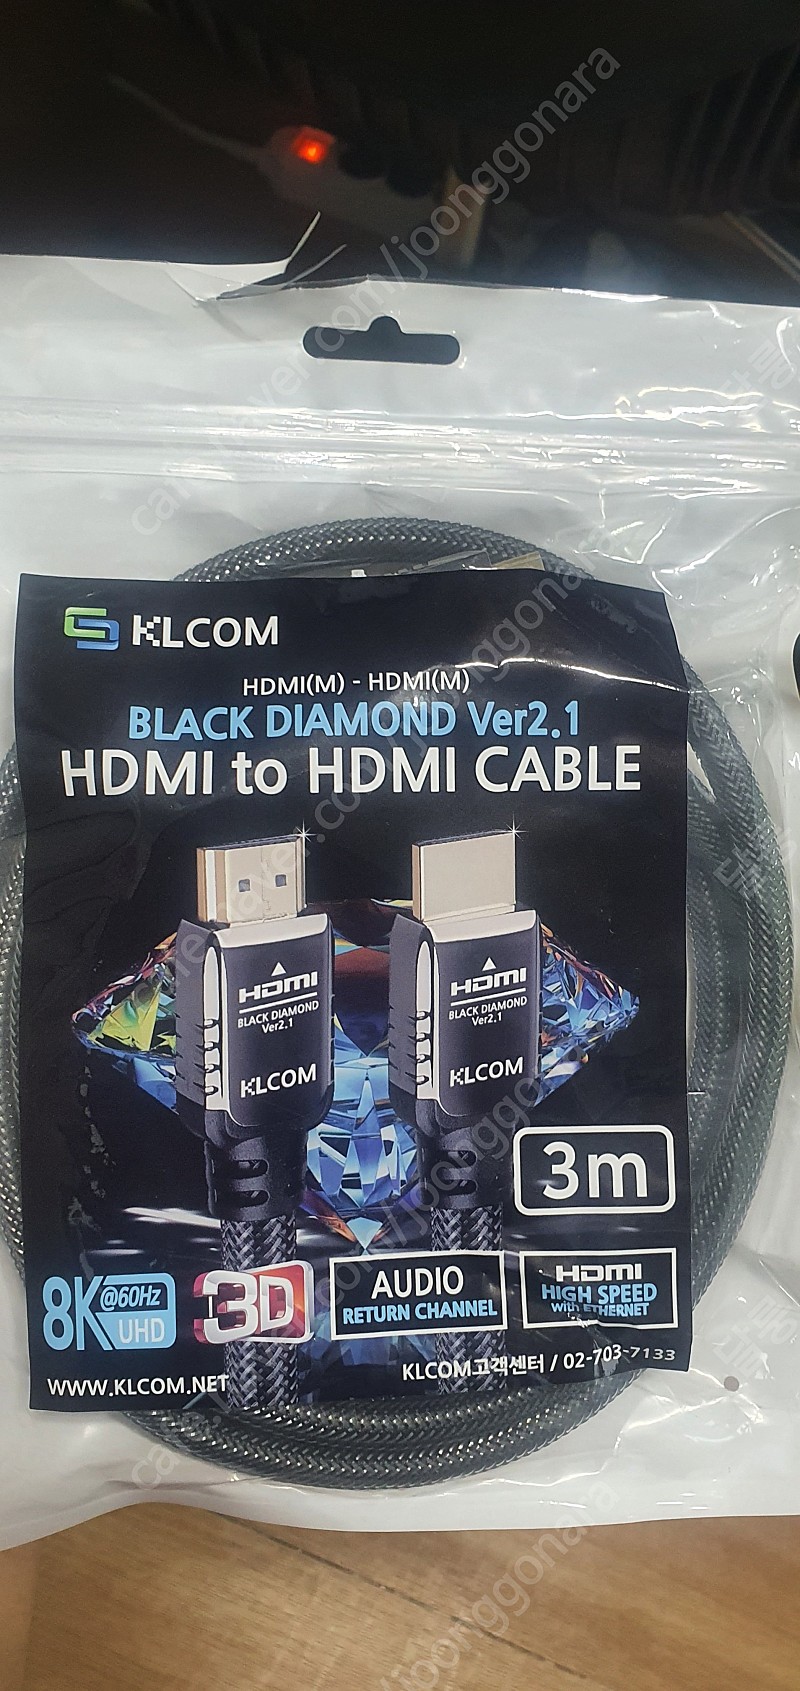 KLCOM BLACK DIAMOND Ver2.1 hdmi 2.1 케이블 (1.5m)